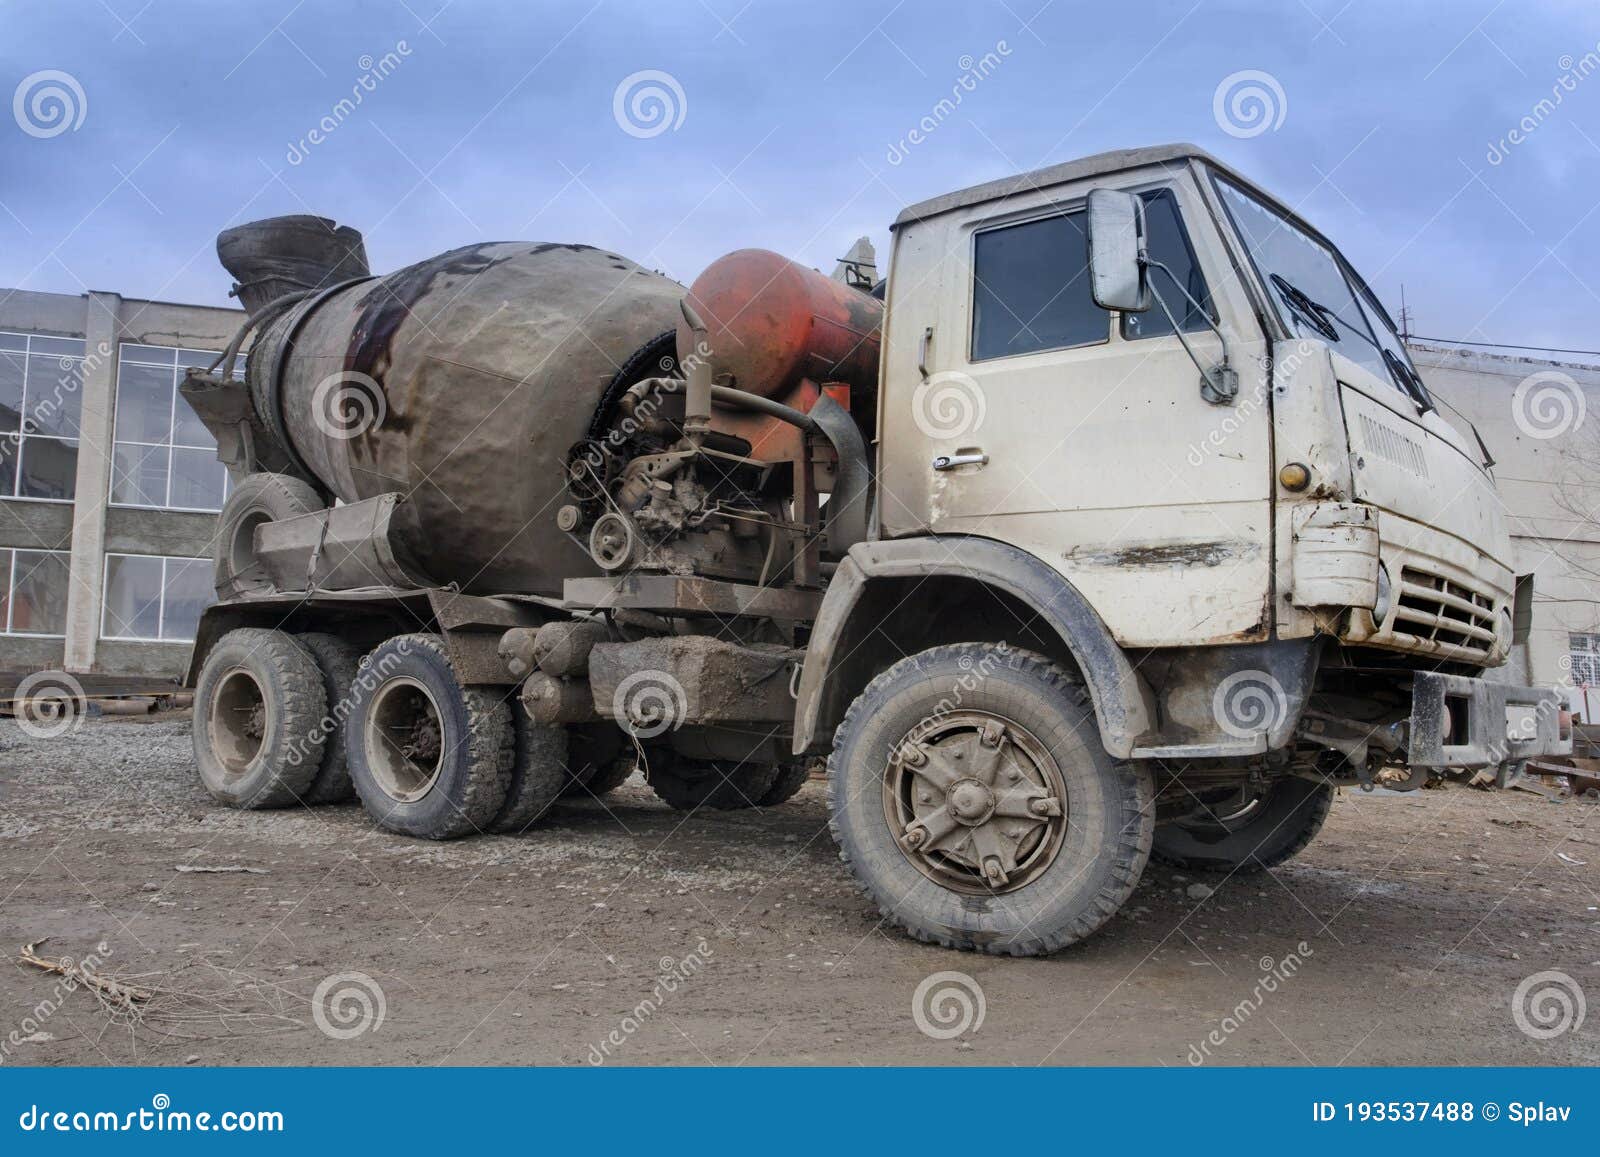 heavy truck, concrete mixer in the workmanship